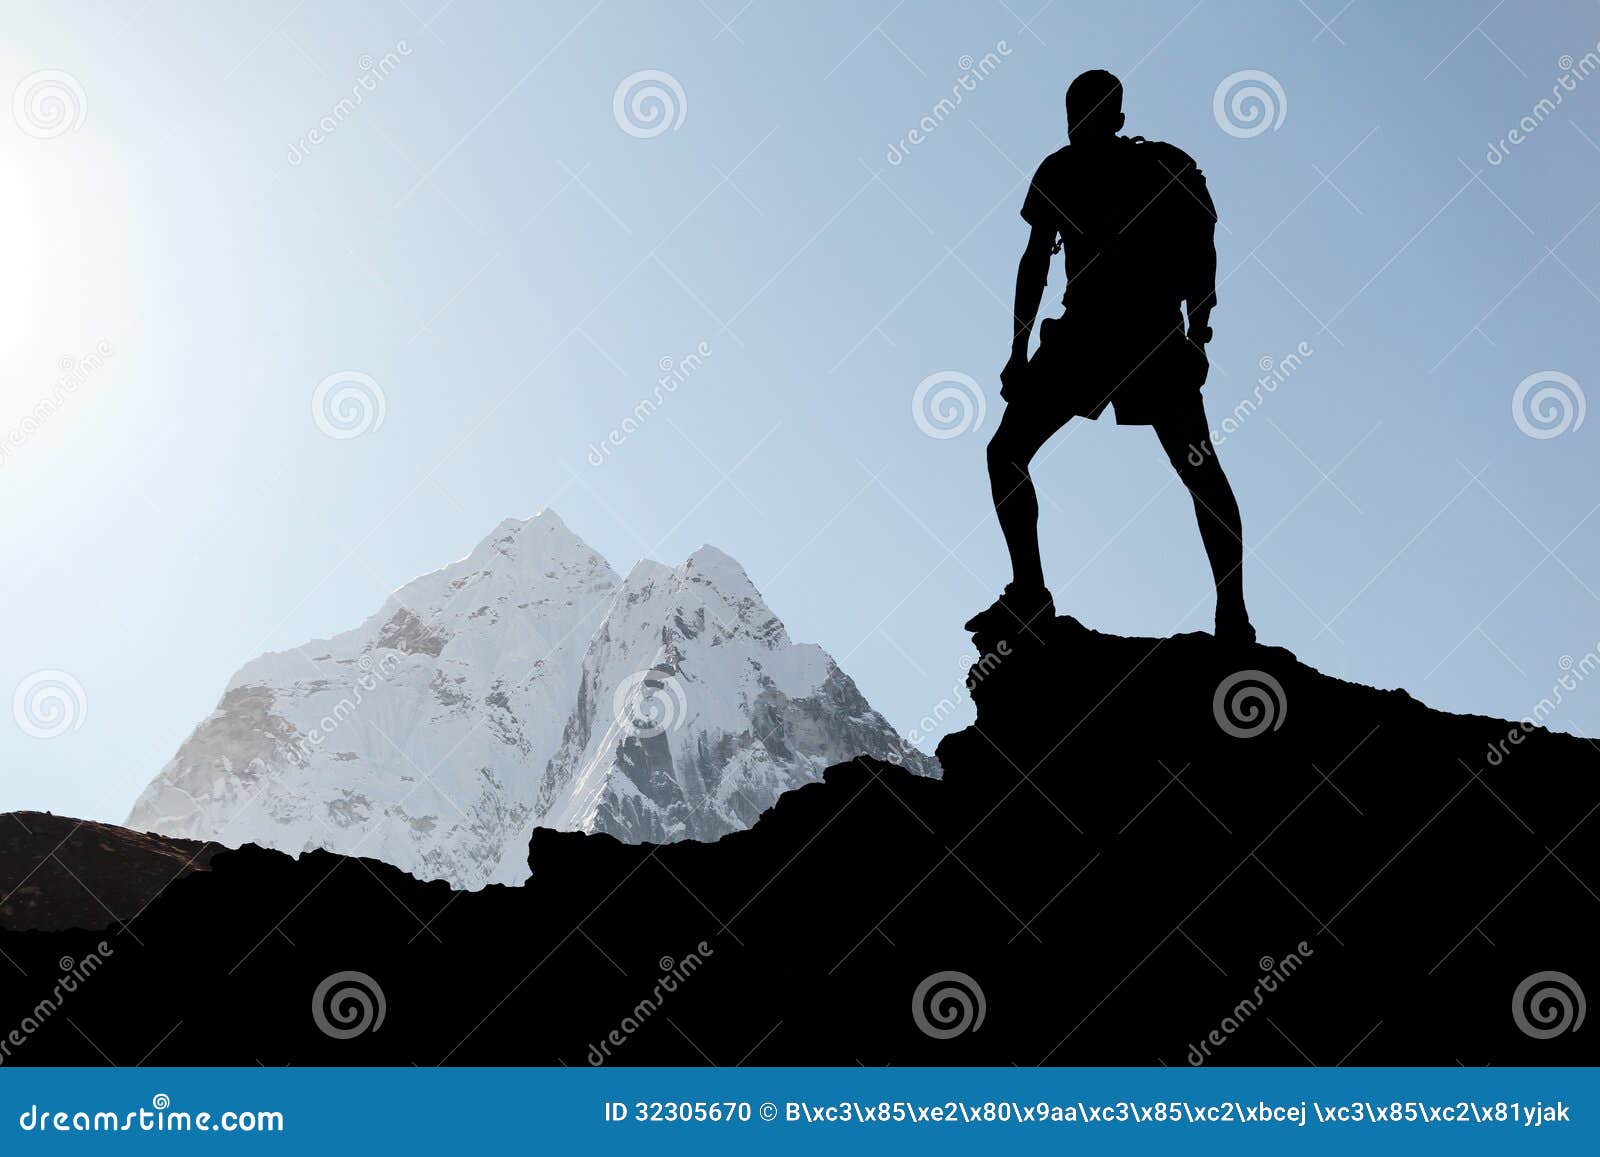 clipart man on mountaintop - photo #23